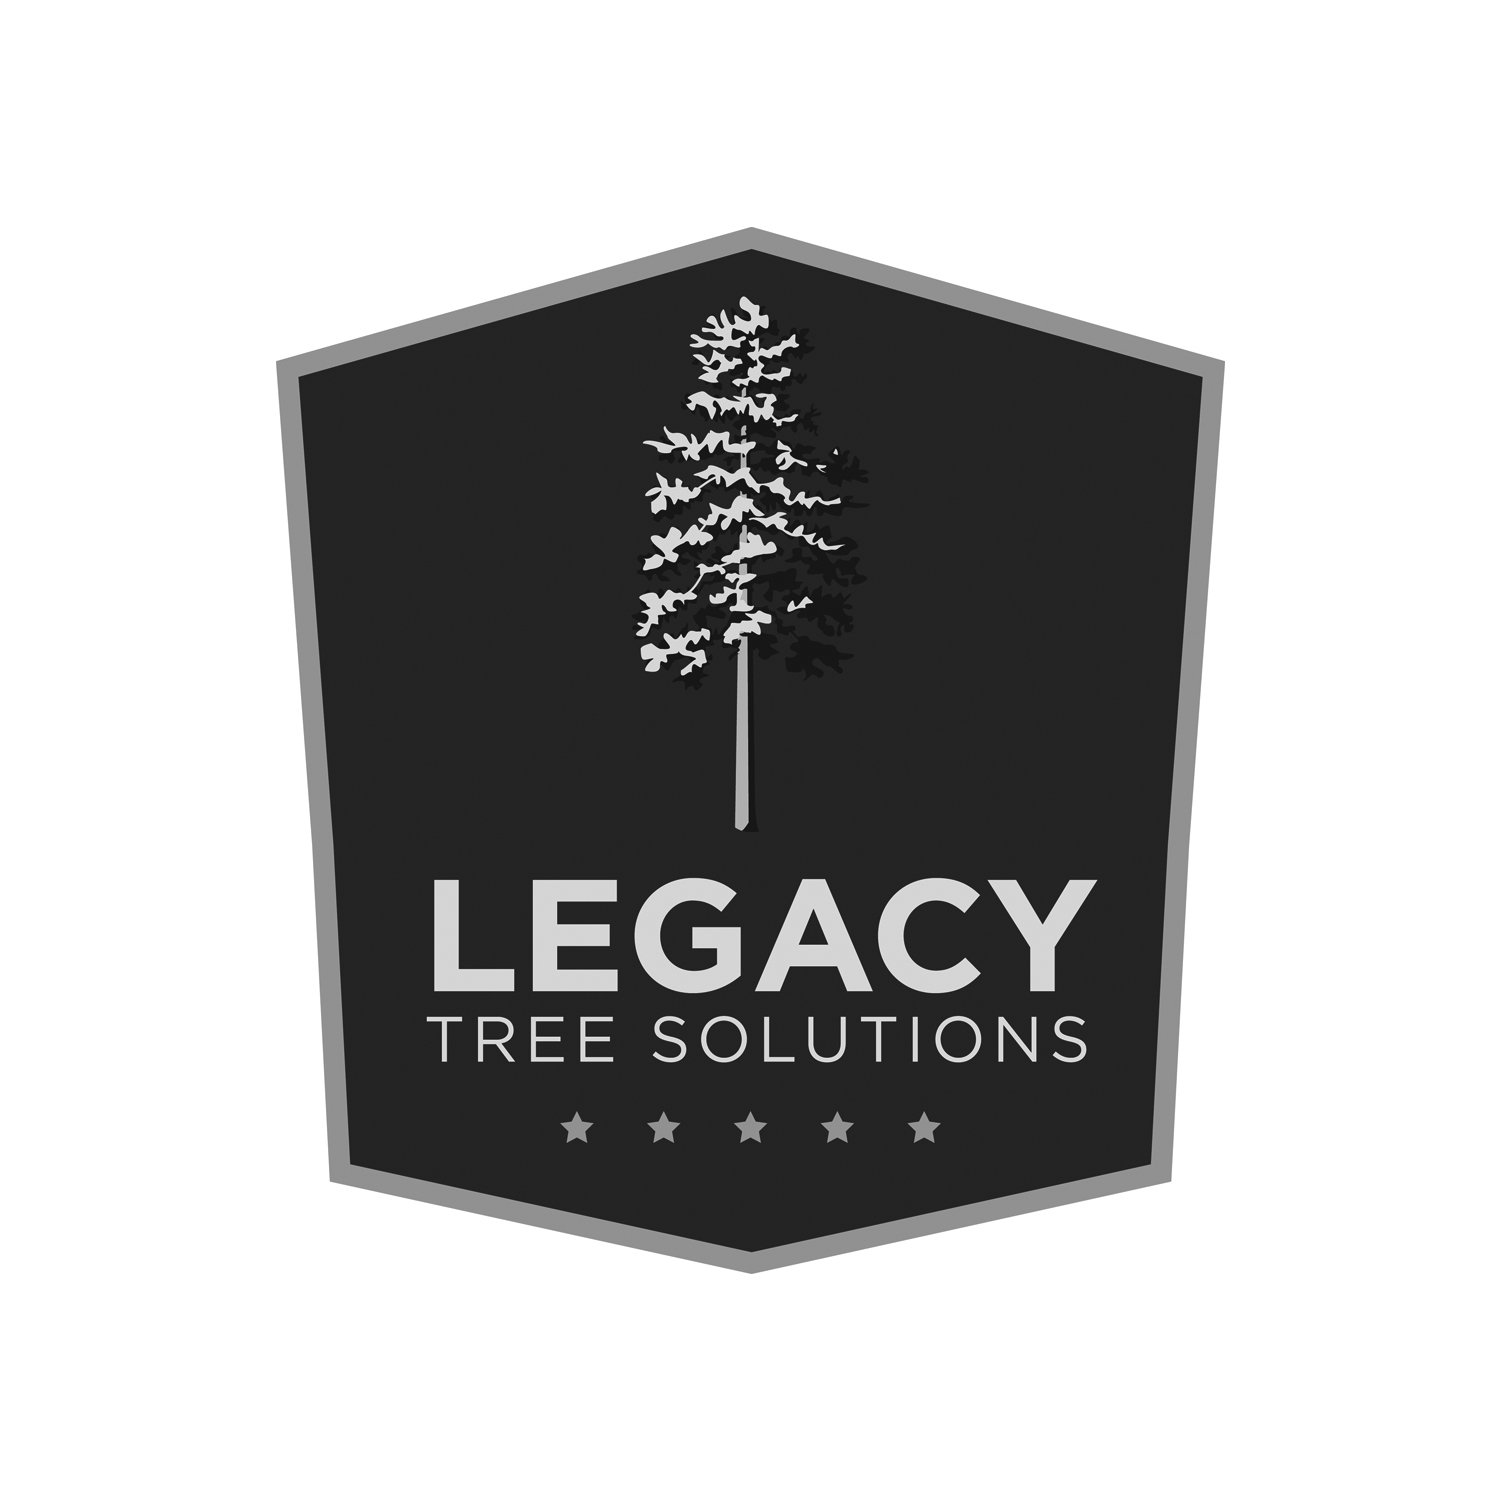 3x3-Legacy_website_BW.jpg